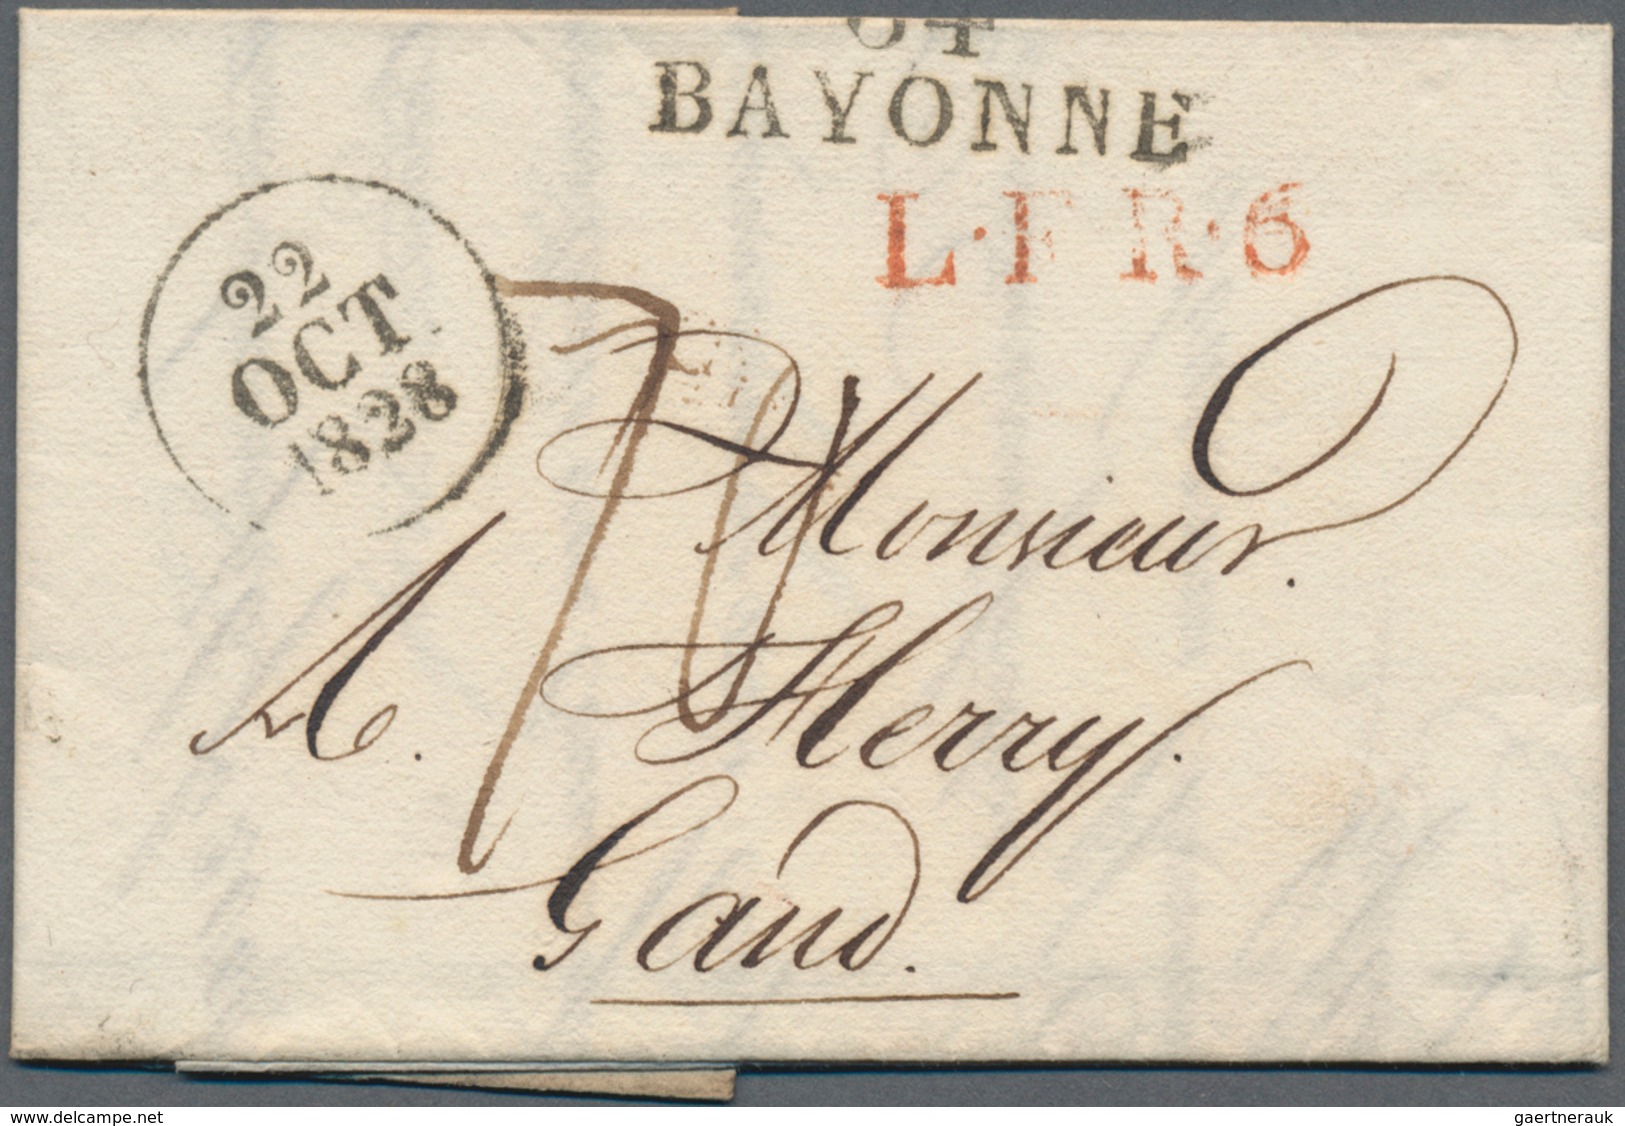 Frankreich - Vorphilatelie: 1828, "04 BAYONNE" Black, One-liner "L F R 6" And Date Circle Handstamp - 1792-1815: Conquered Departments